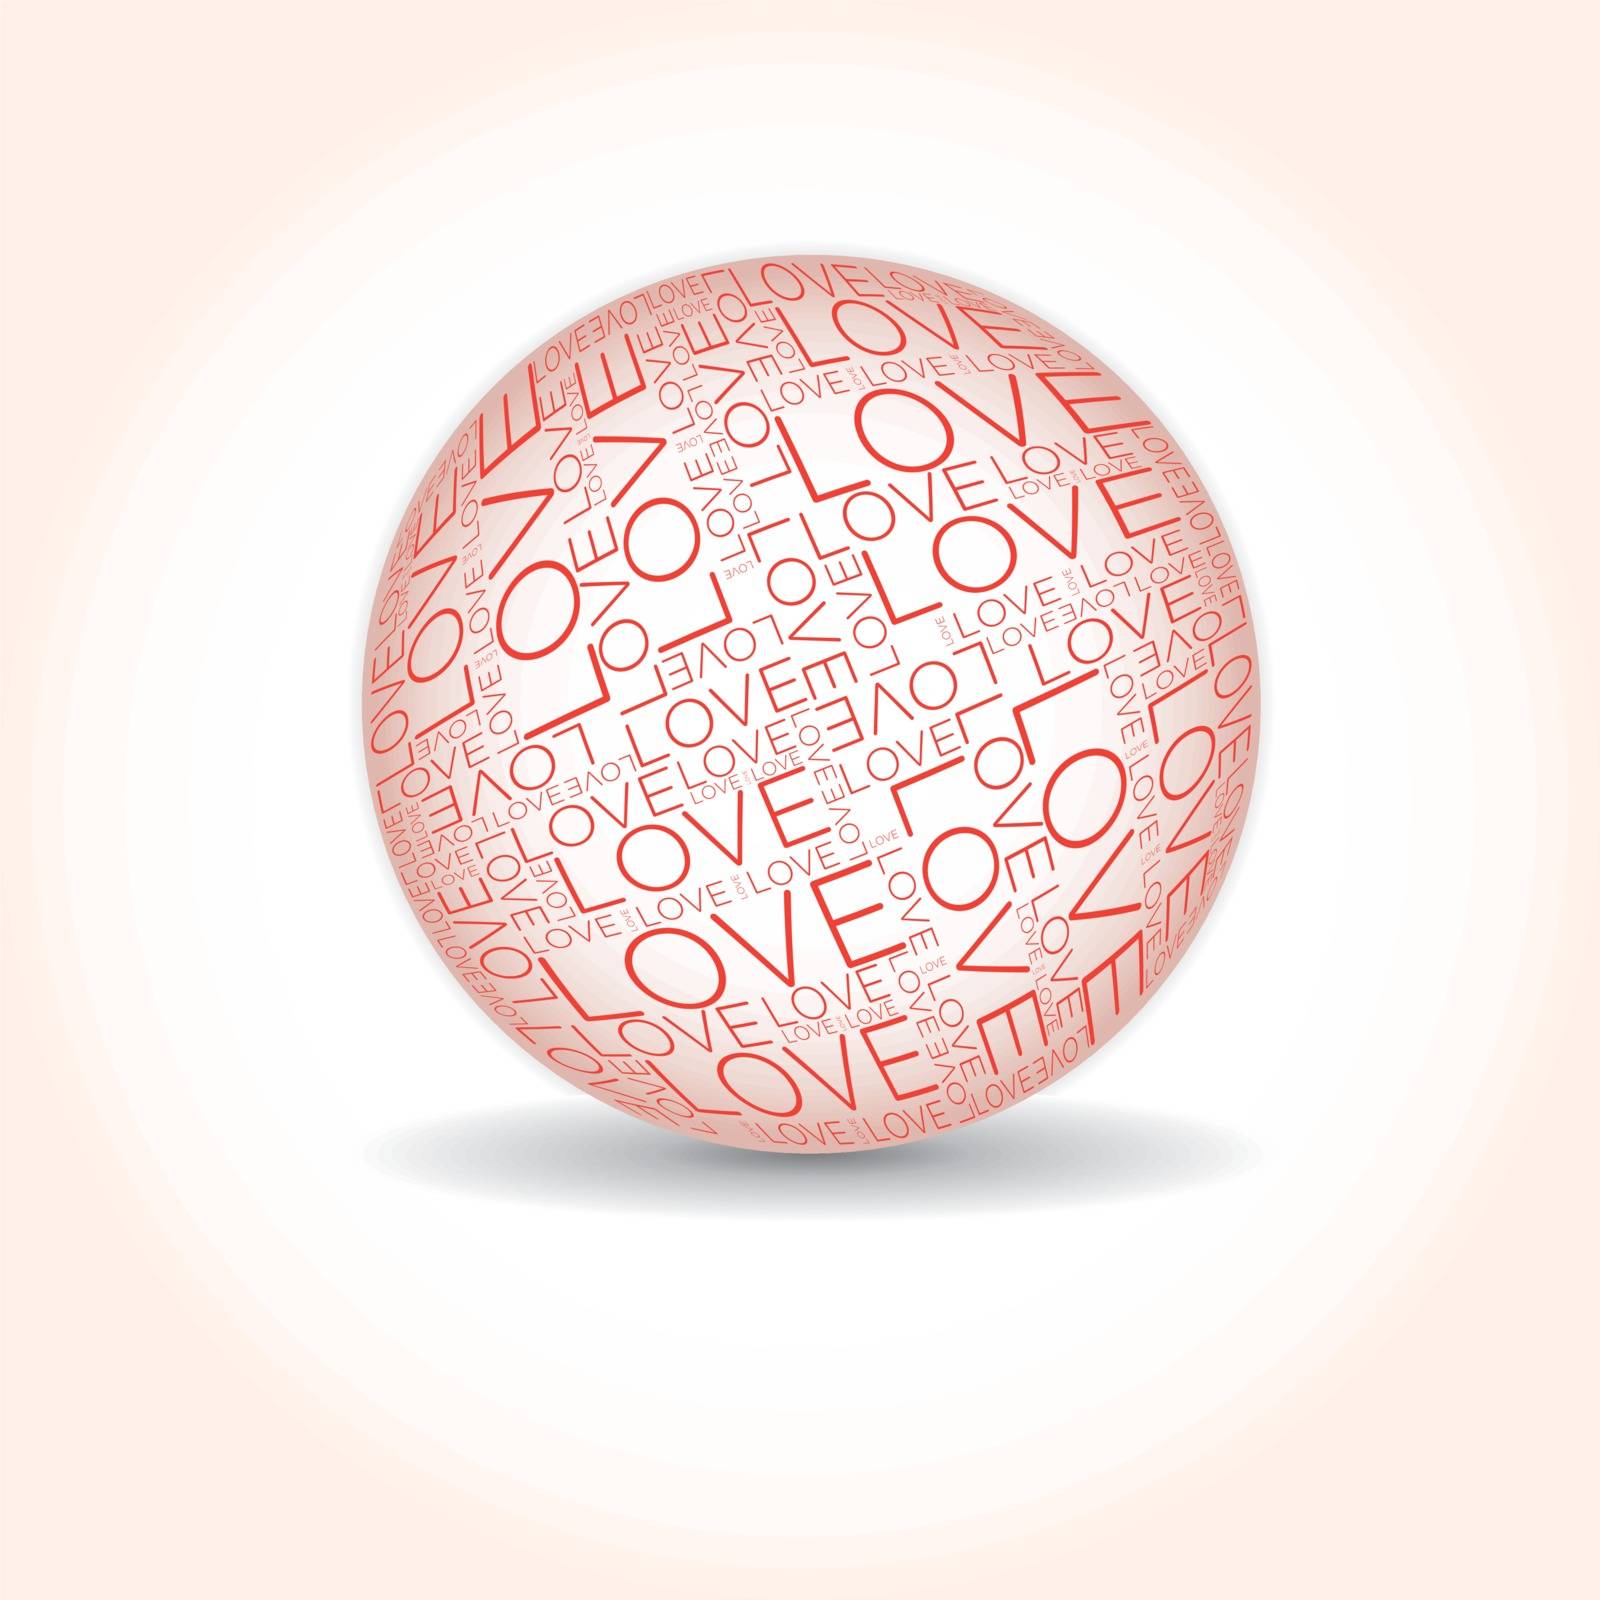 Love word collage by alvaroc